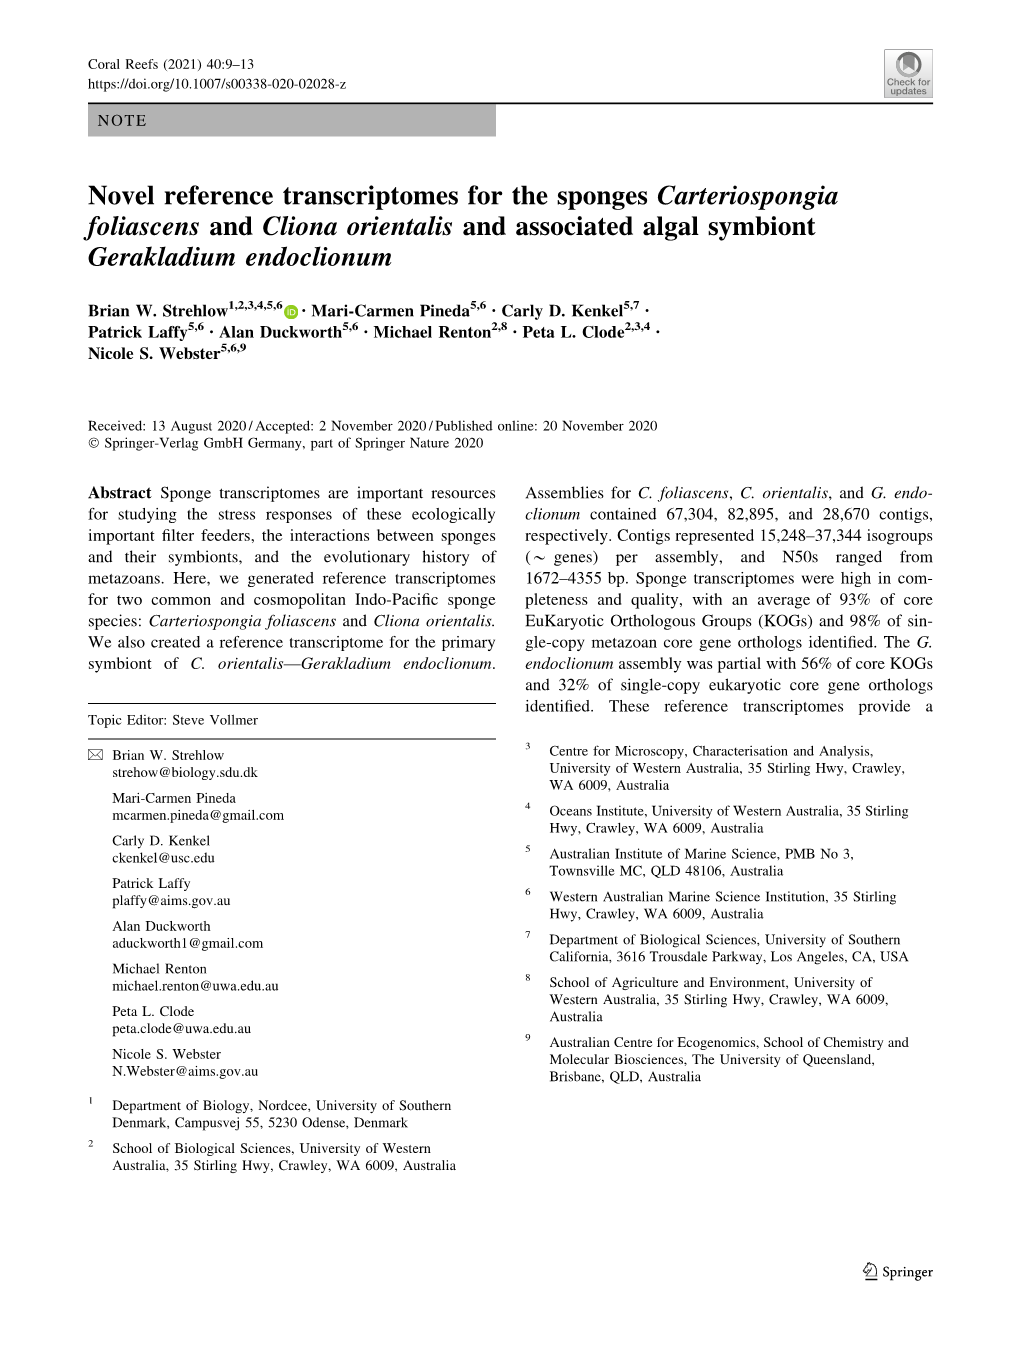 Novel Reference Transcriptomes for the Sponges Carteriospongia Foliascens and Cliona Orientalis and Associated Algal Symbiont Gerakladium Endoclionum